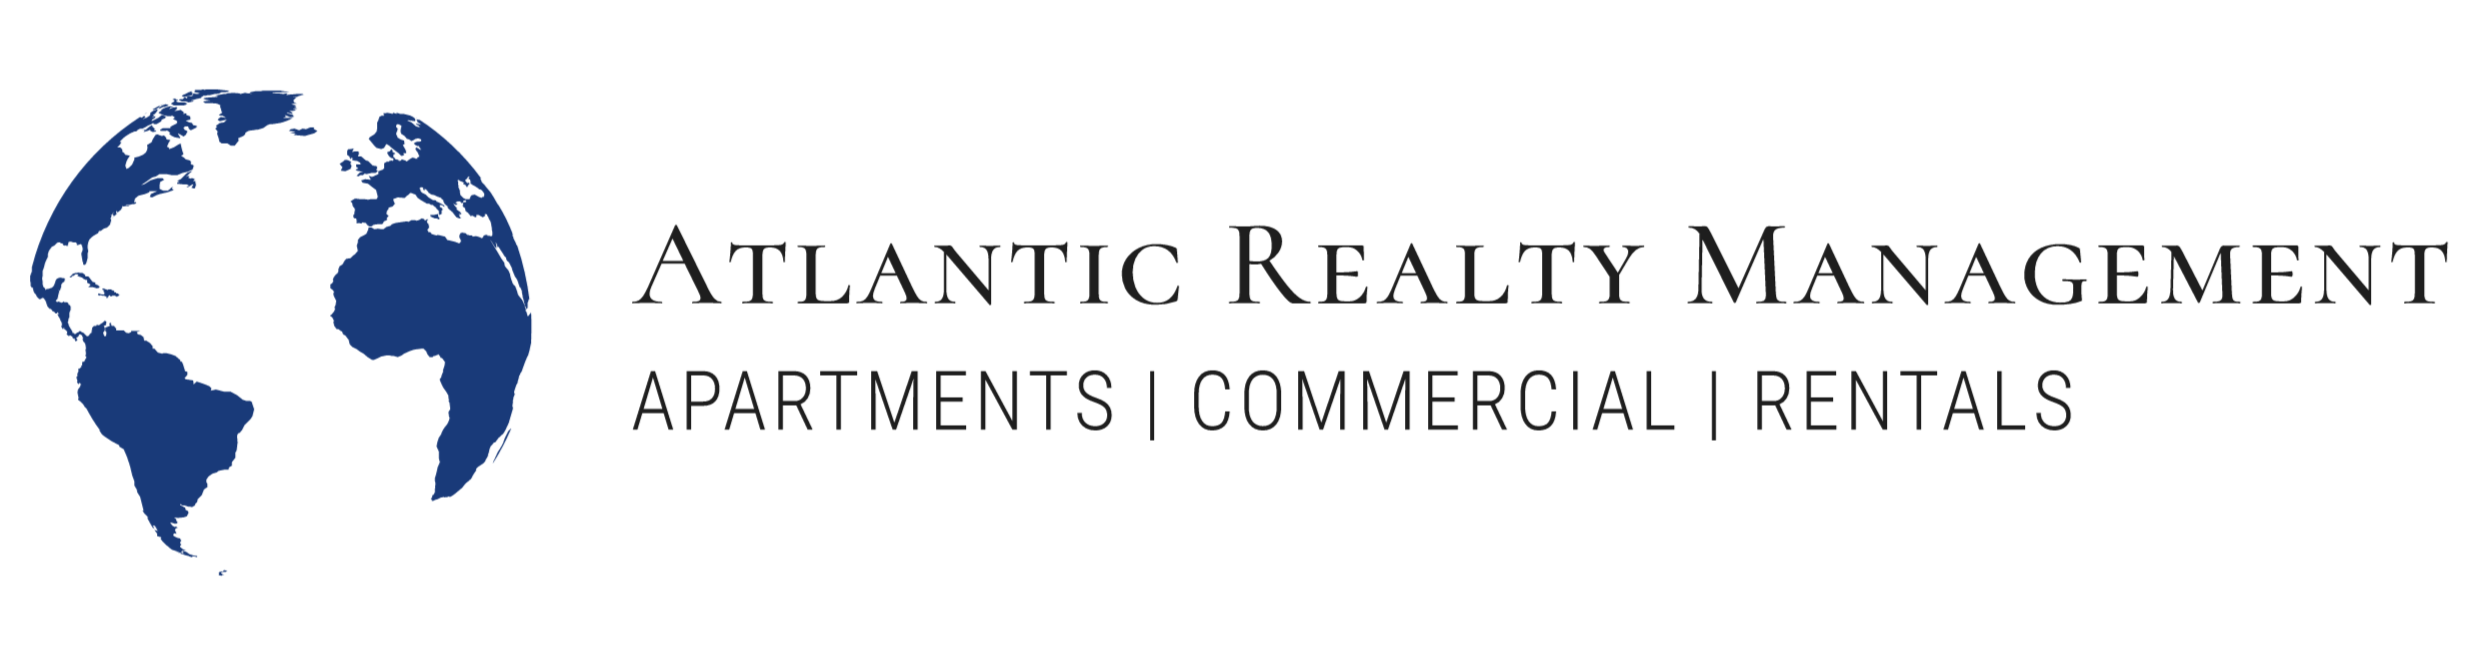 Atlantic Realty Management